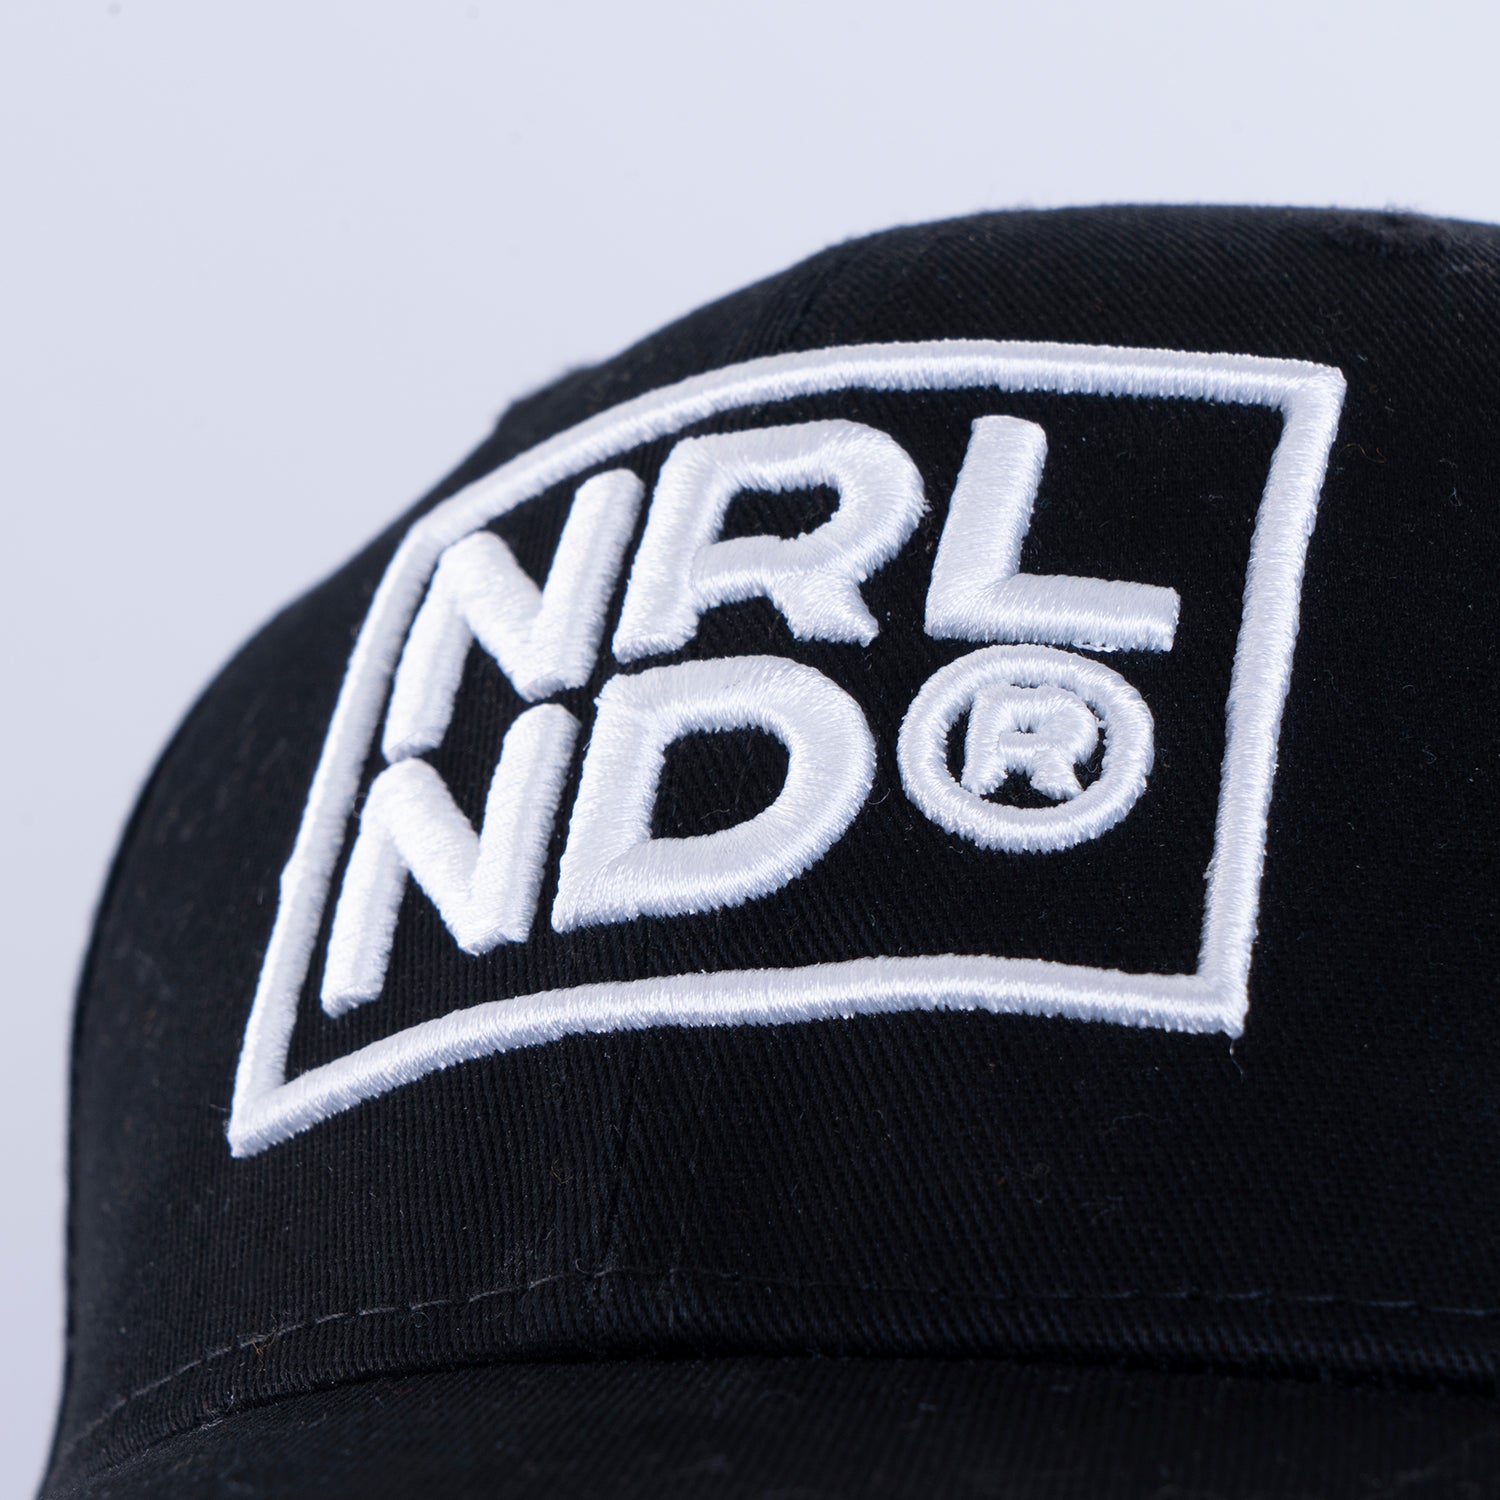 NRLND CAP - HOOKED BLACK